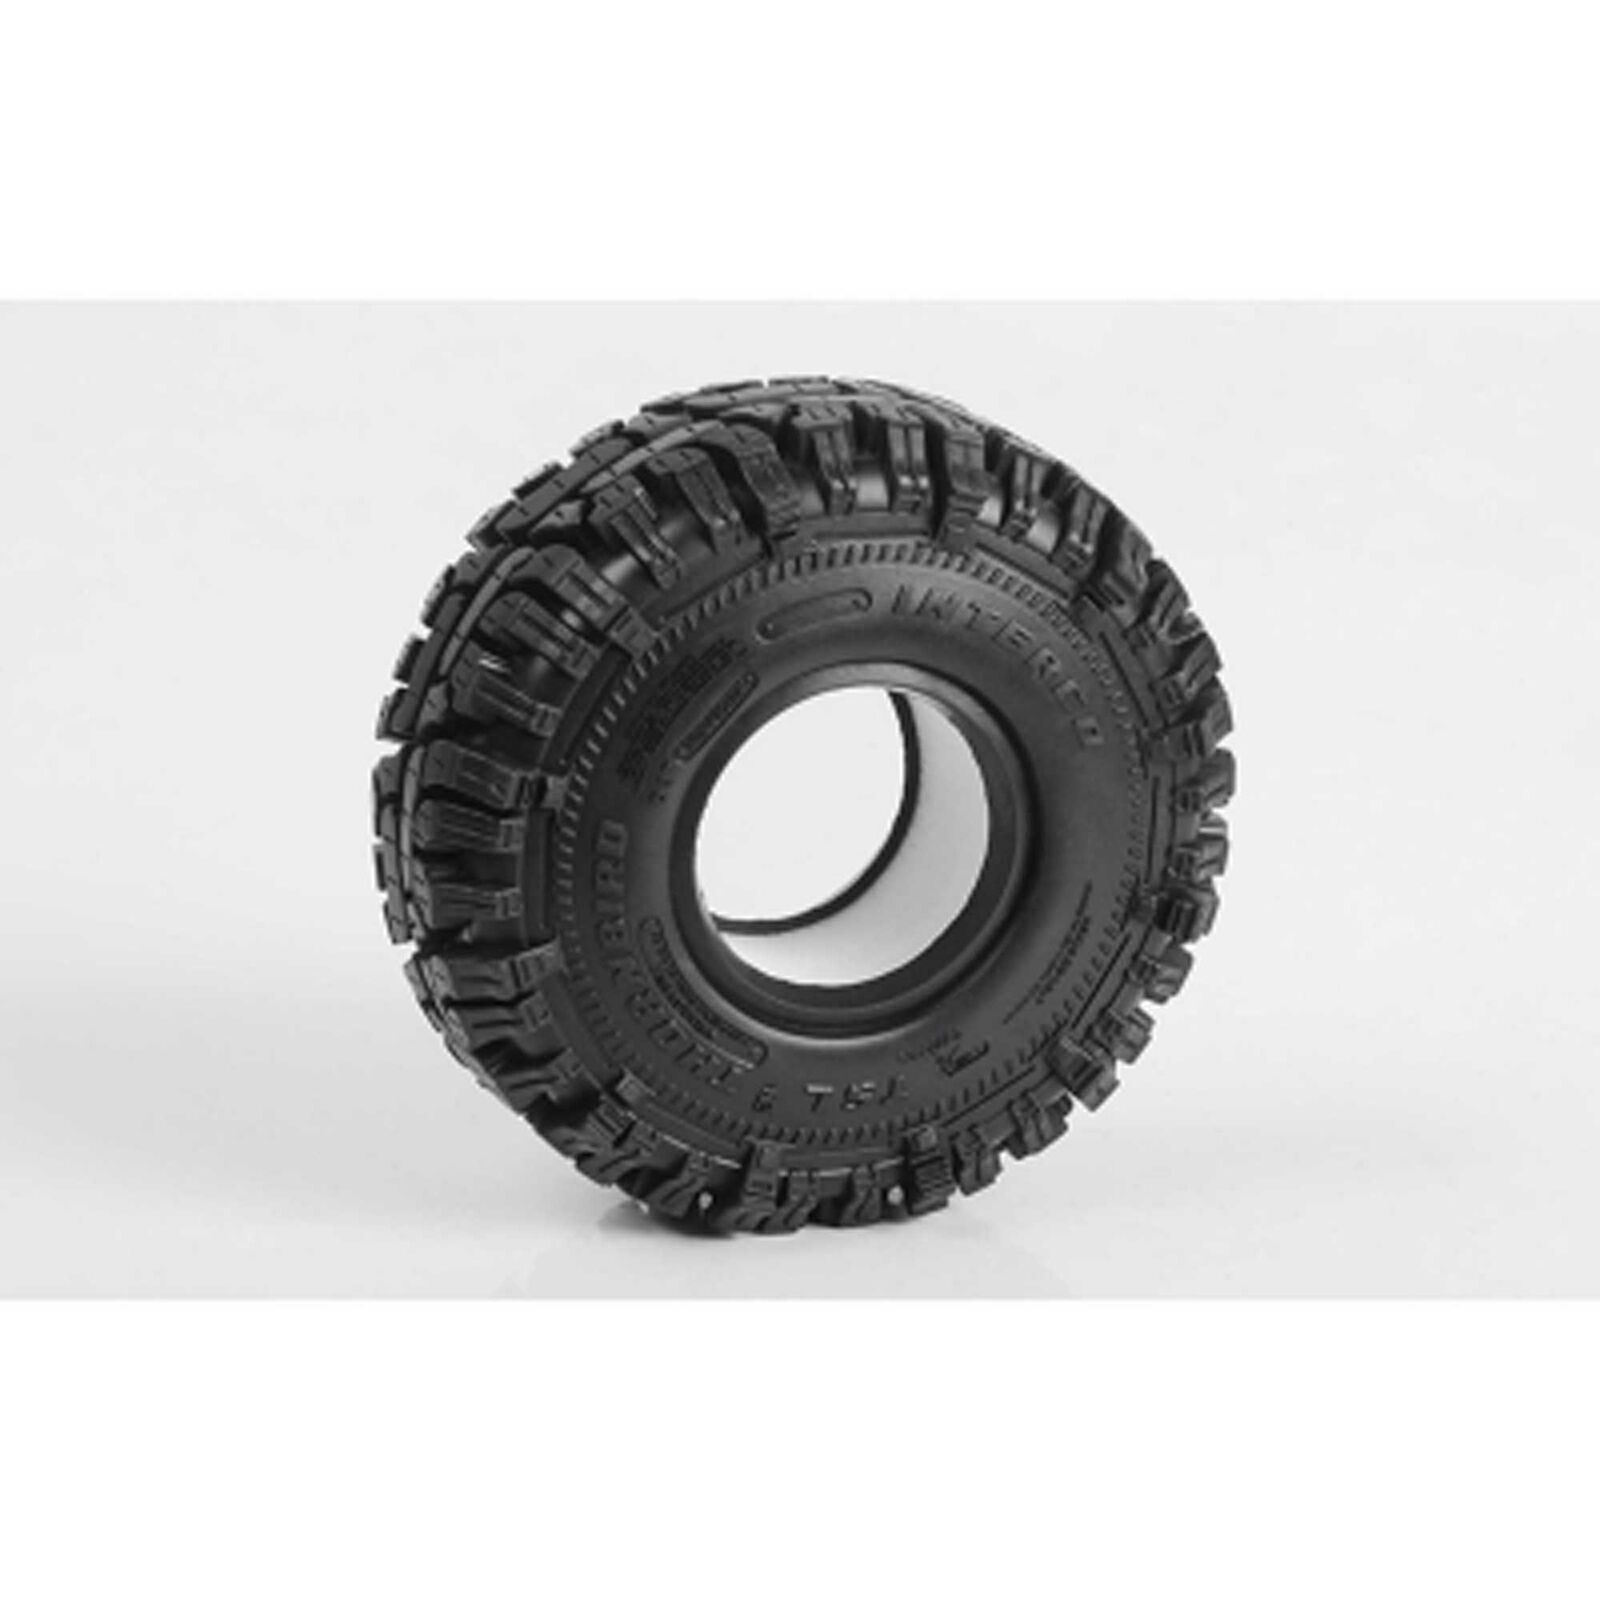 Interco Super Swamper Thornbird 1.9" Scale Tires (2)